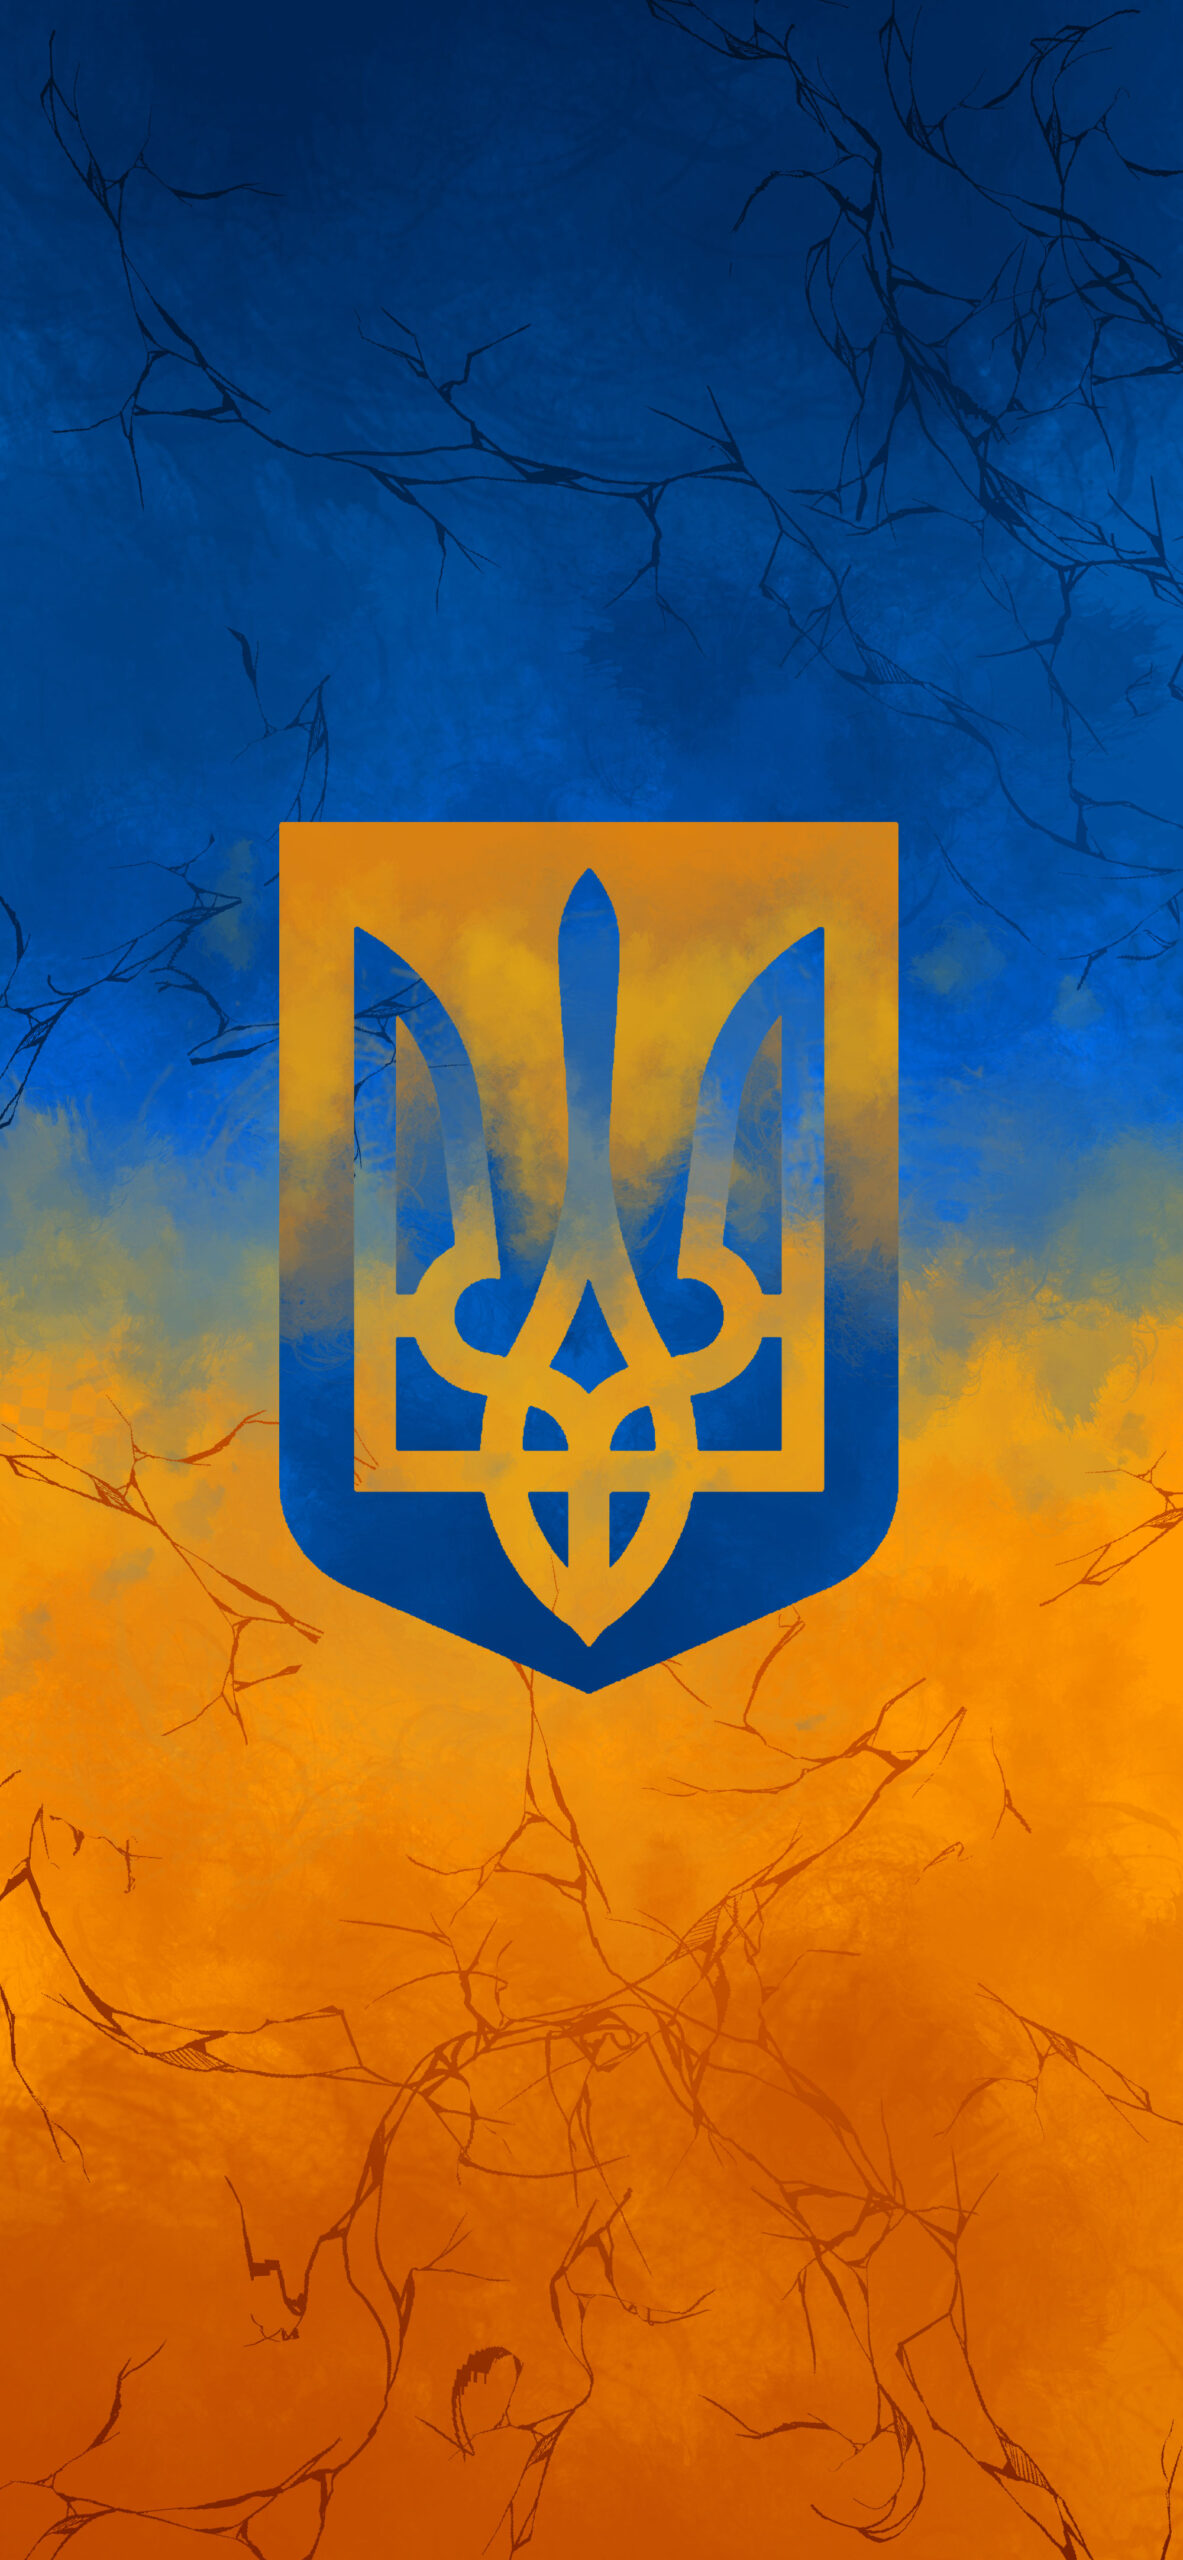 ukraine state emblem wallpaper